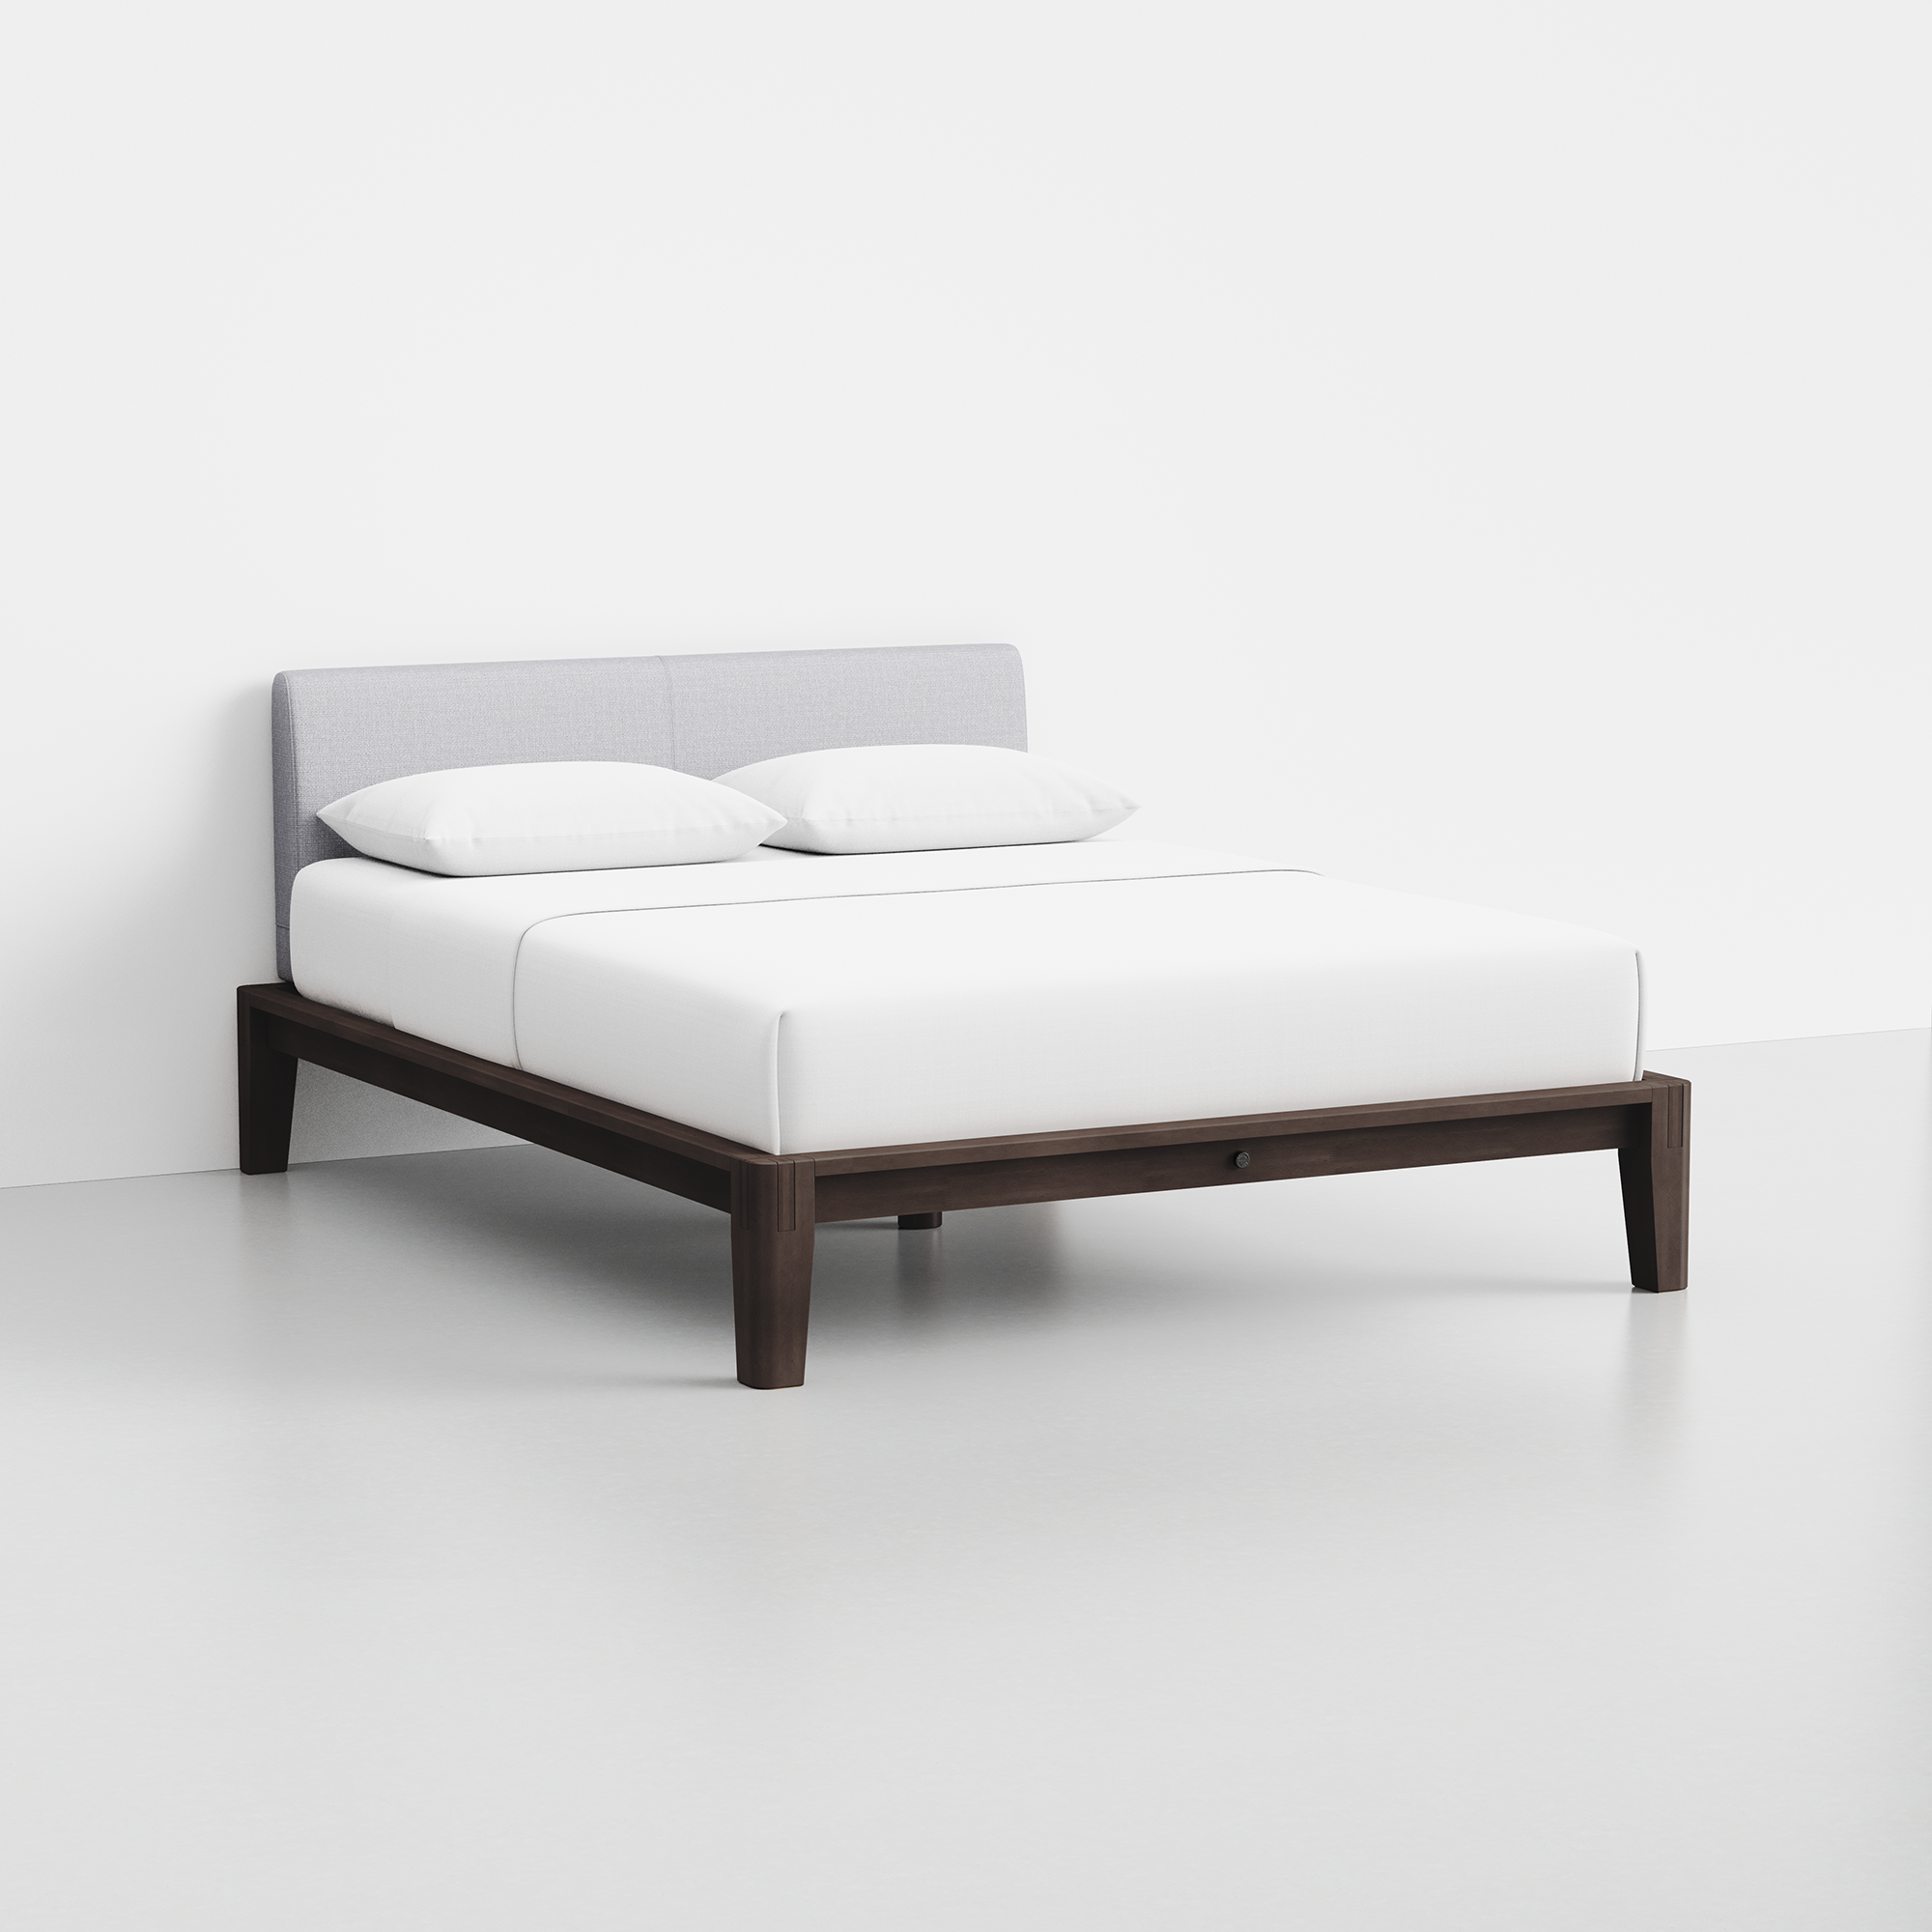 The Bed (Espresso / Fog Grey) - Render - Angled